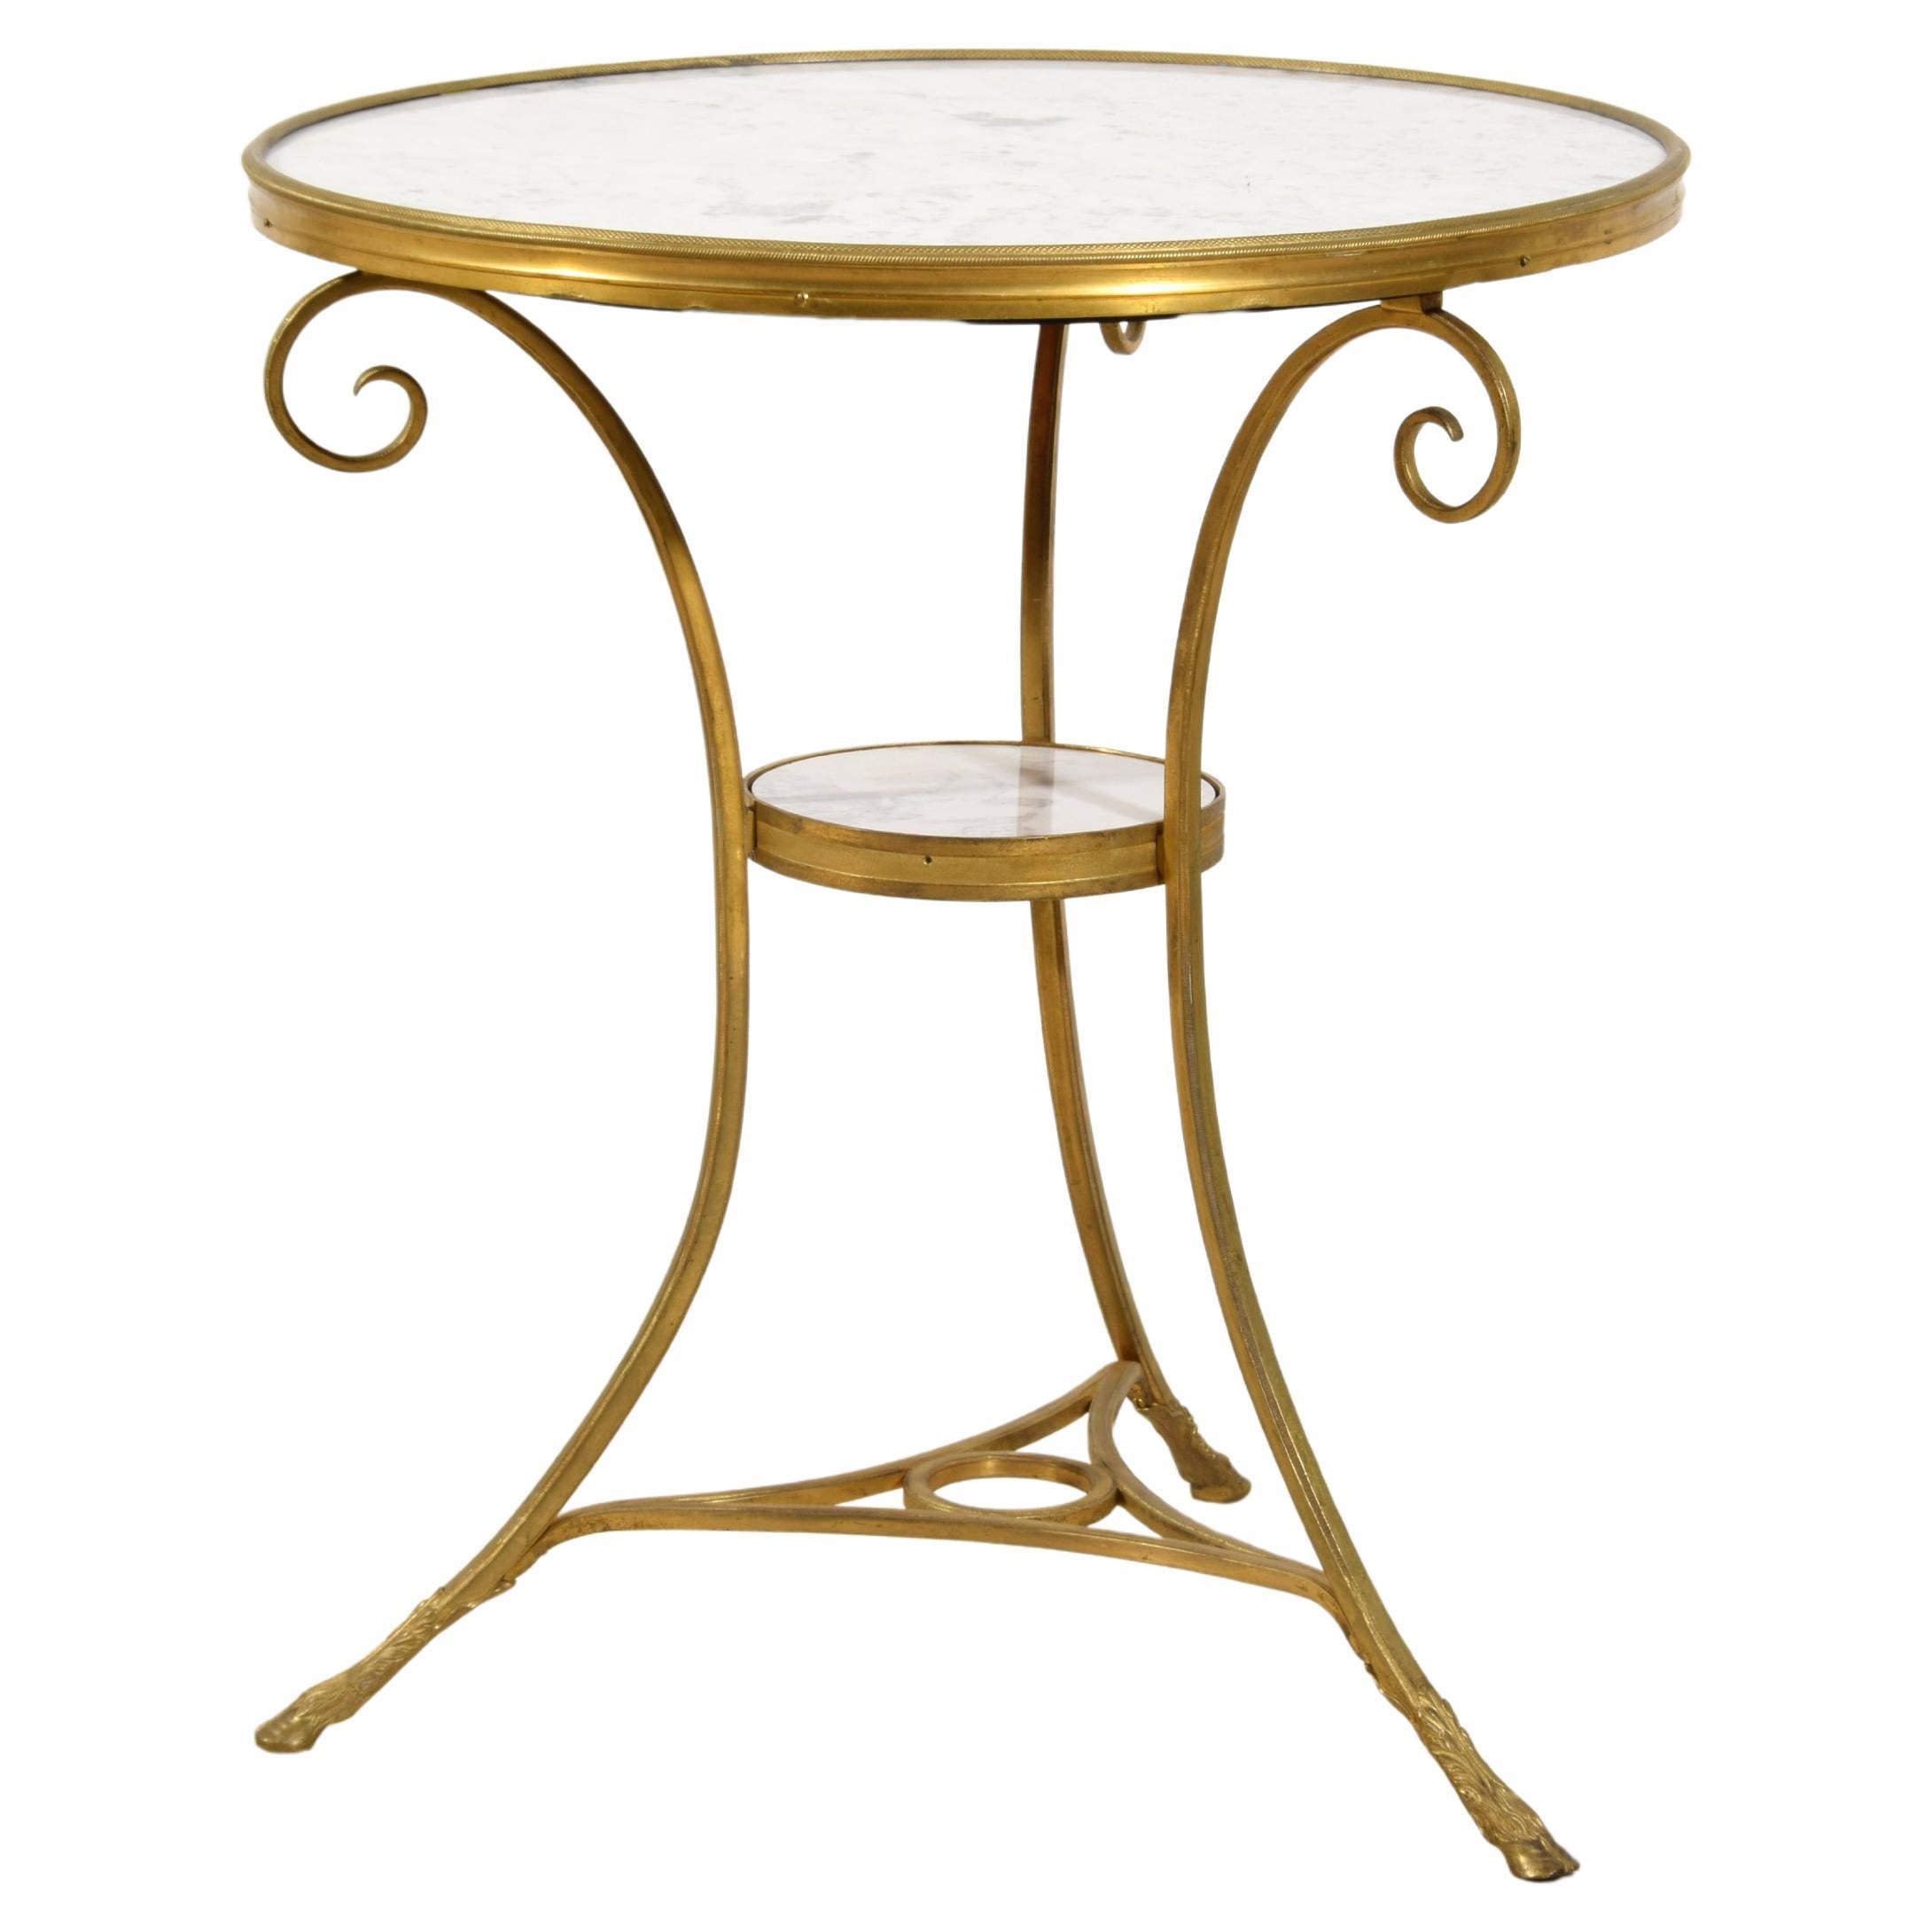 19th Century, Louis XVI Style French Gilt Bronze Tripod Coffee Table or Guéridon For Sale